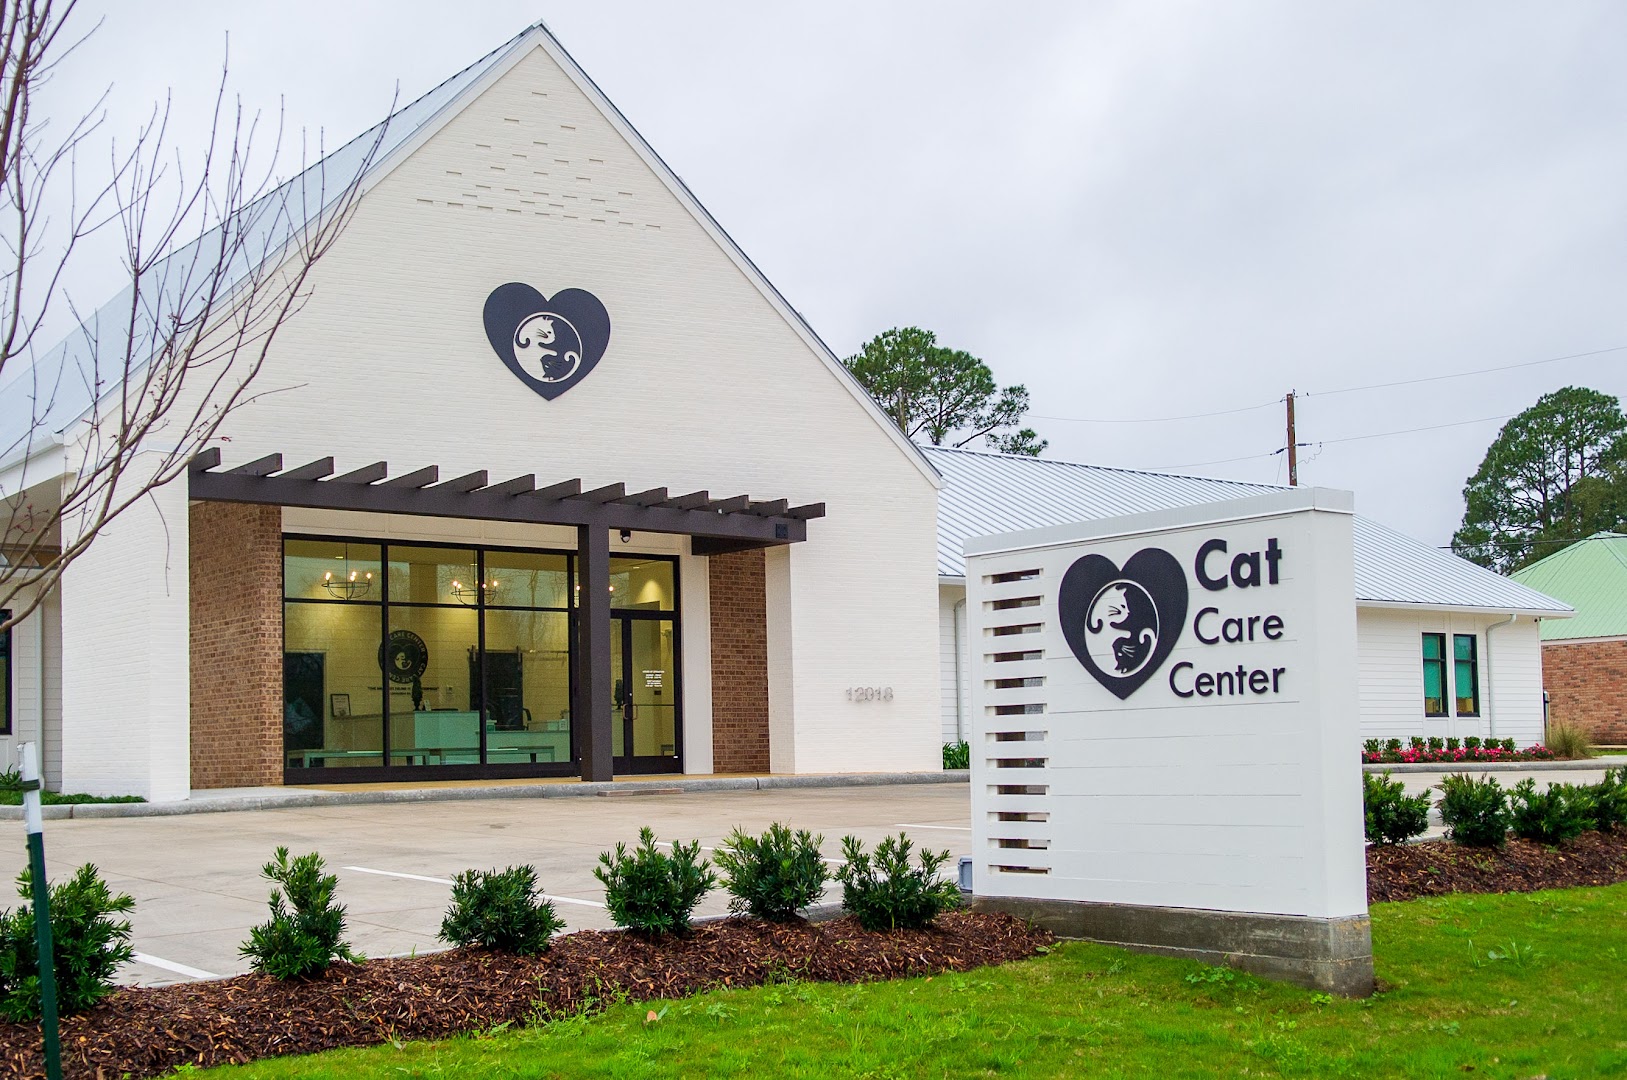 Cat Care Center